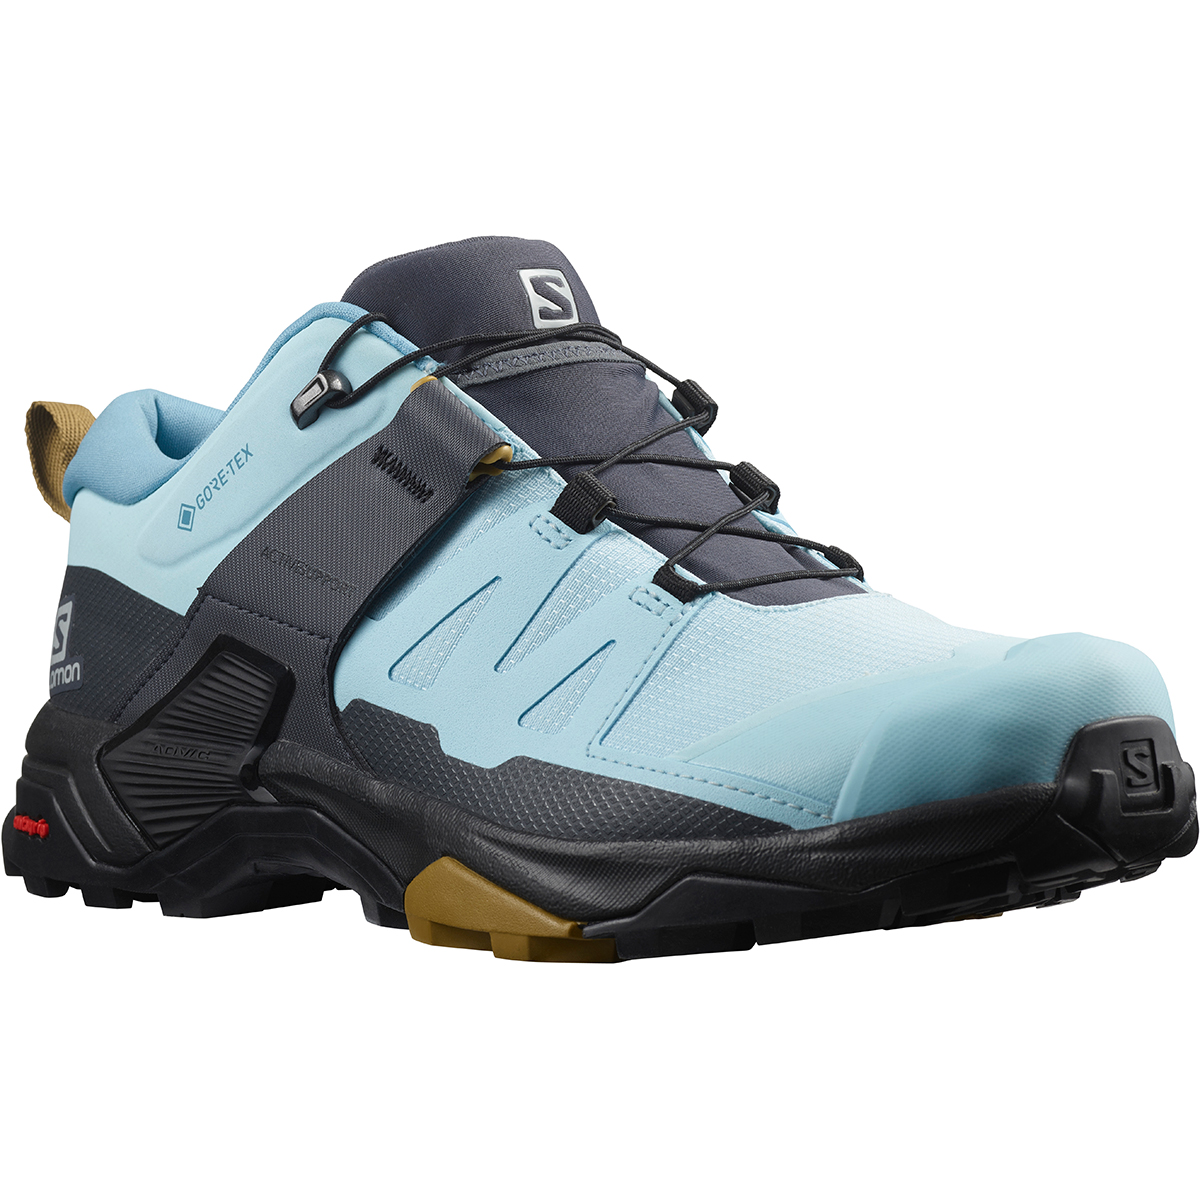 Salomon Women's X Ultra 4 Gore-Tex Hiking Shoes - Size 9